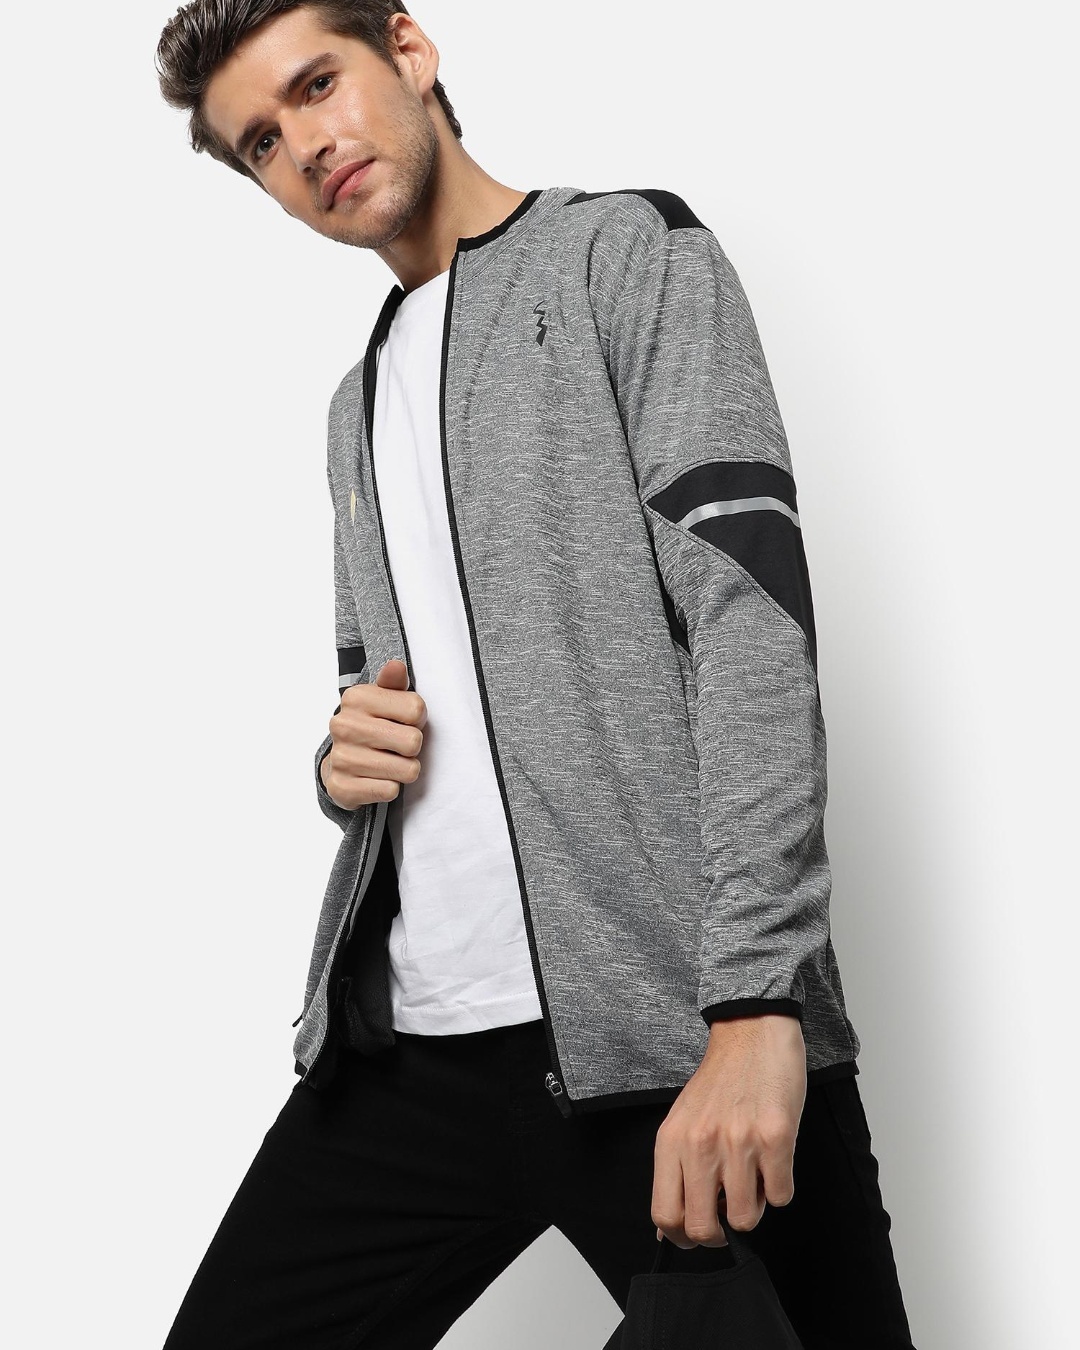 Shop Men's Grey and Black Color Block Jacket